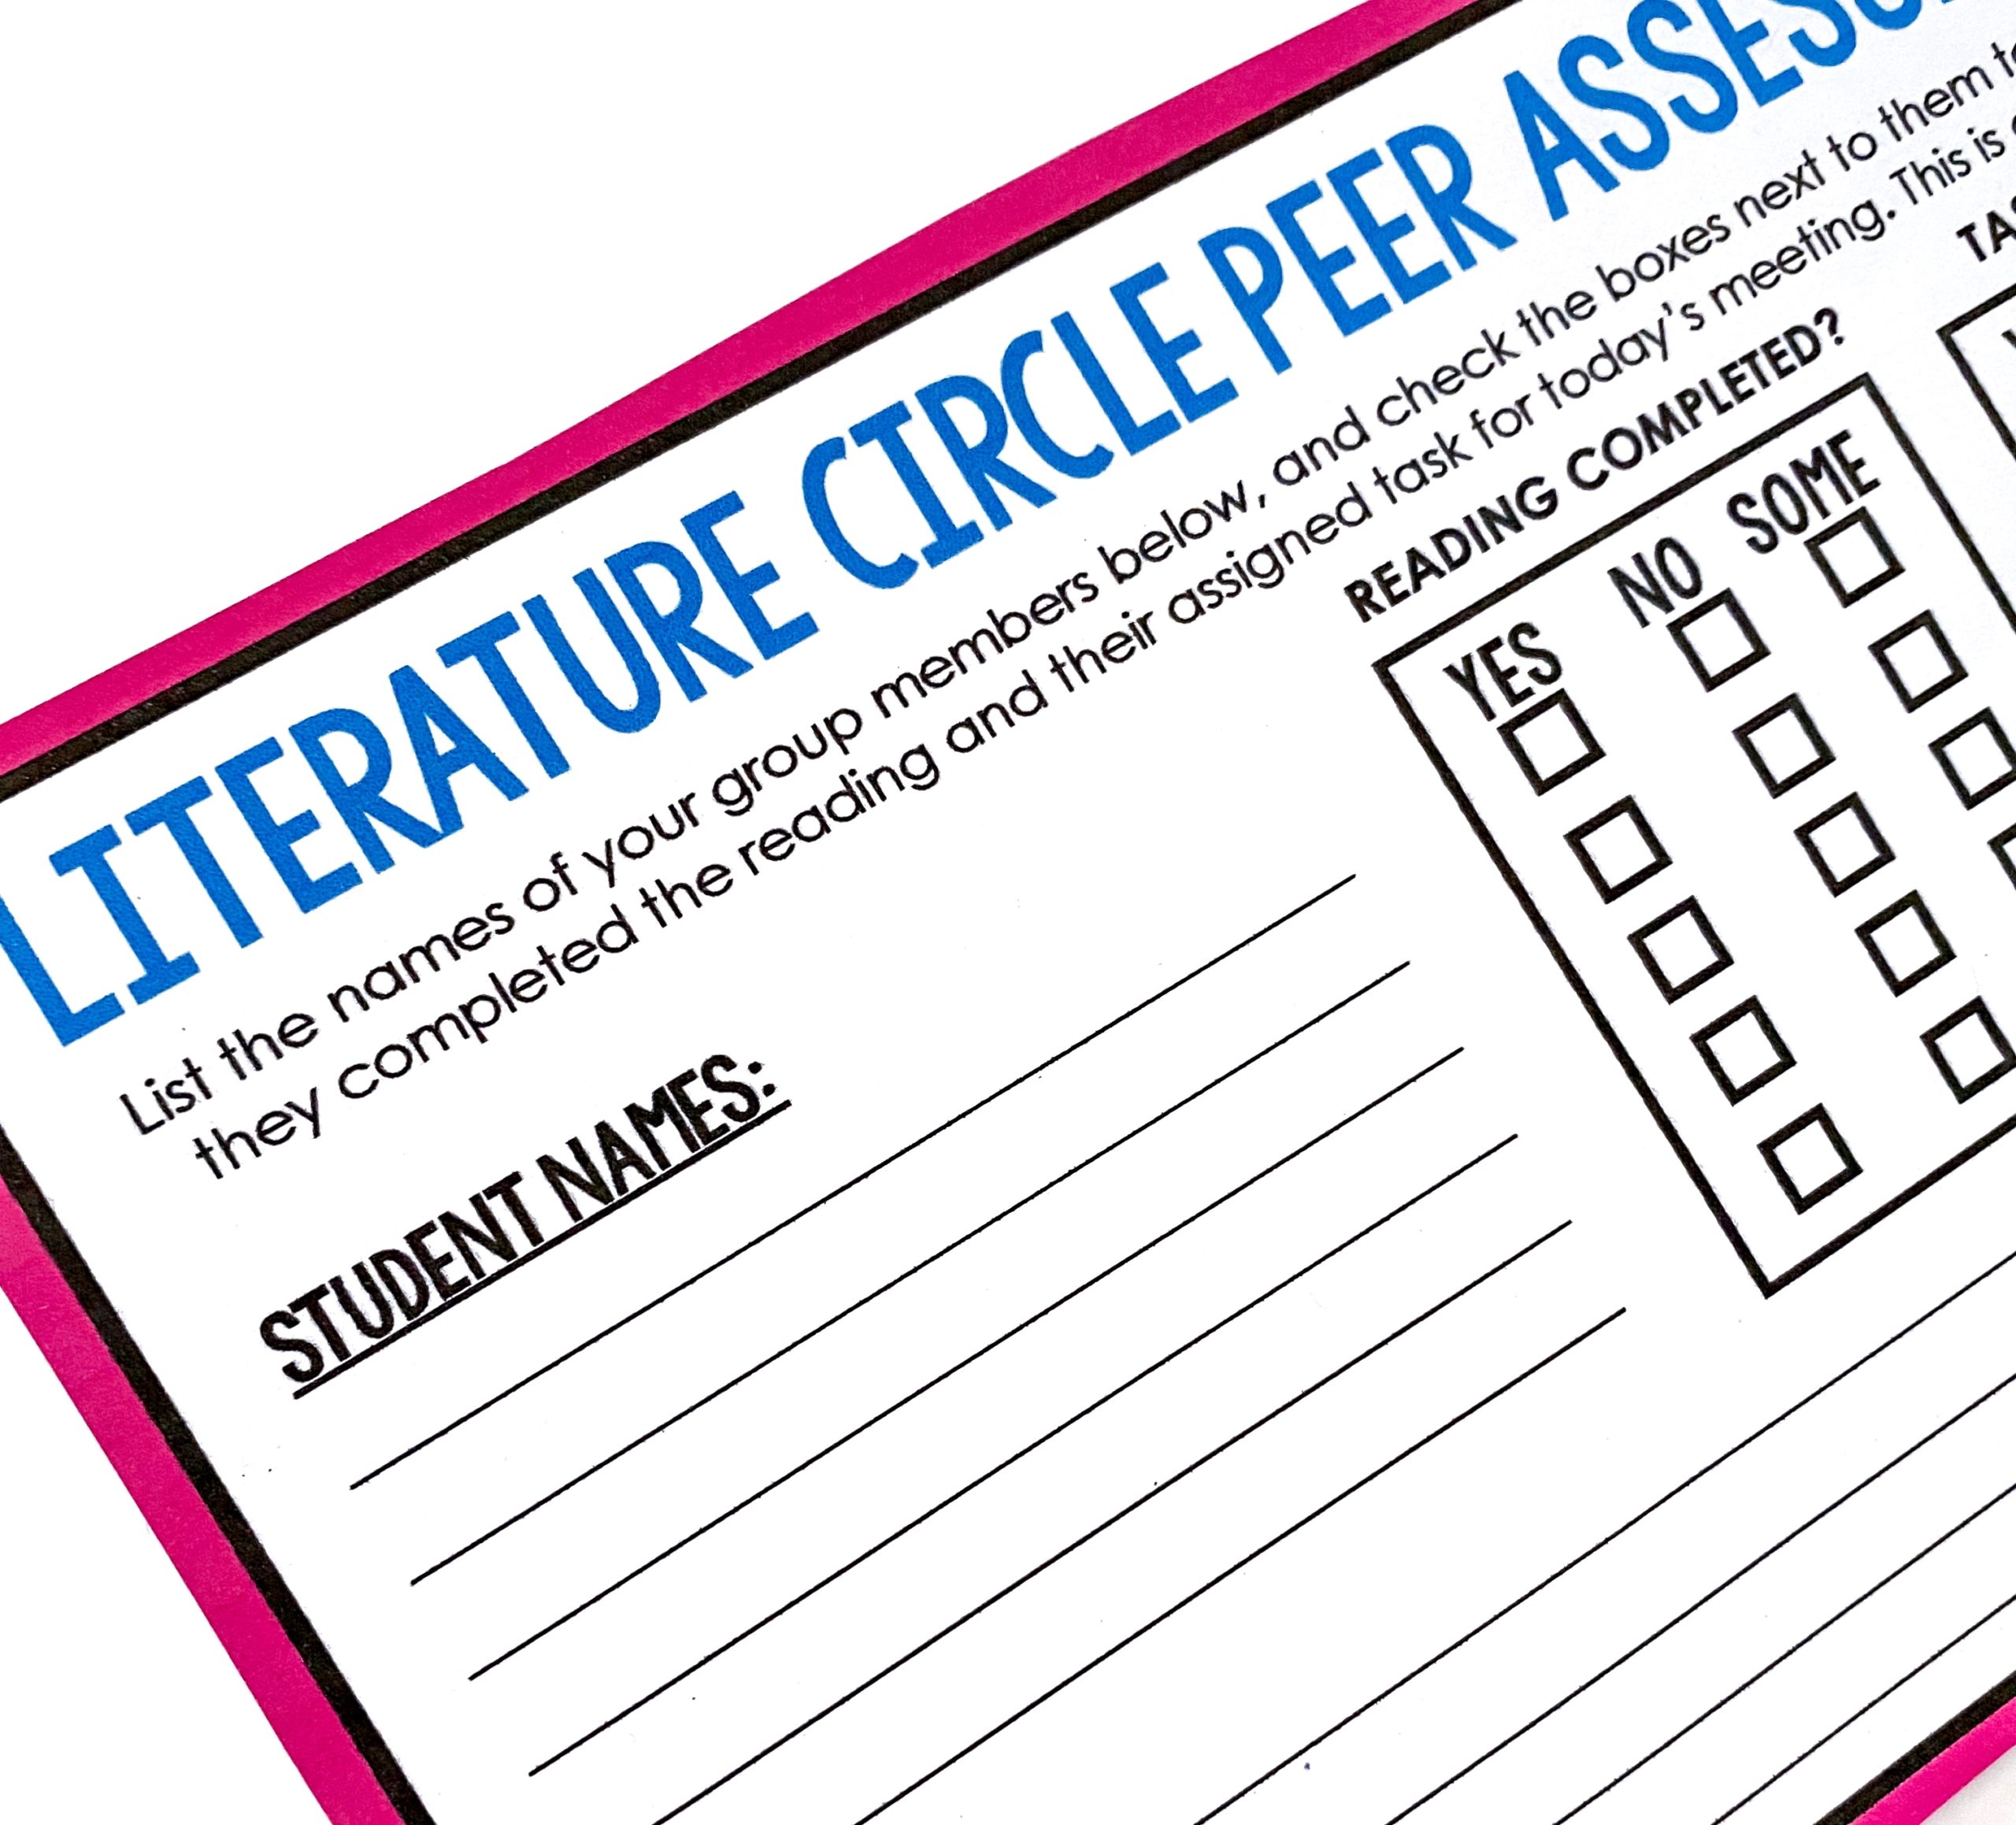 Literature Circle Peer Assessment